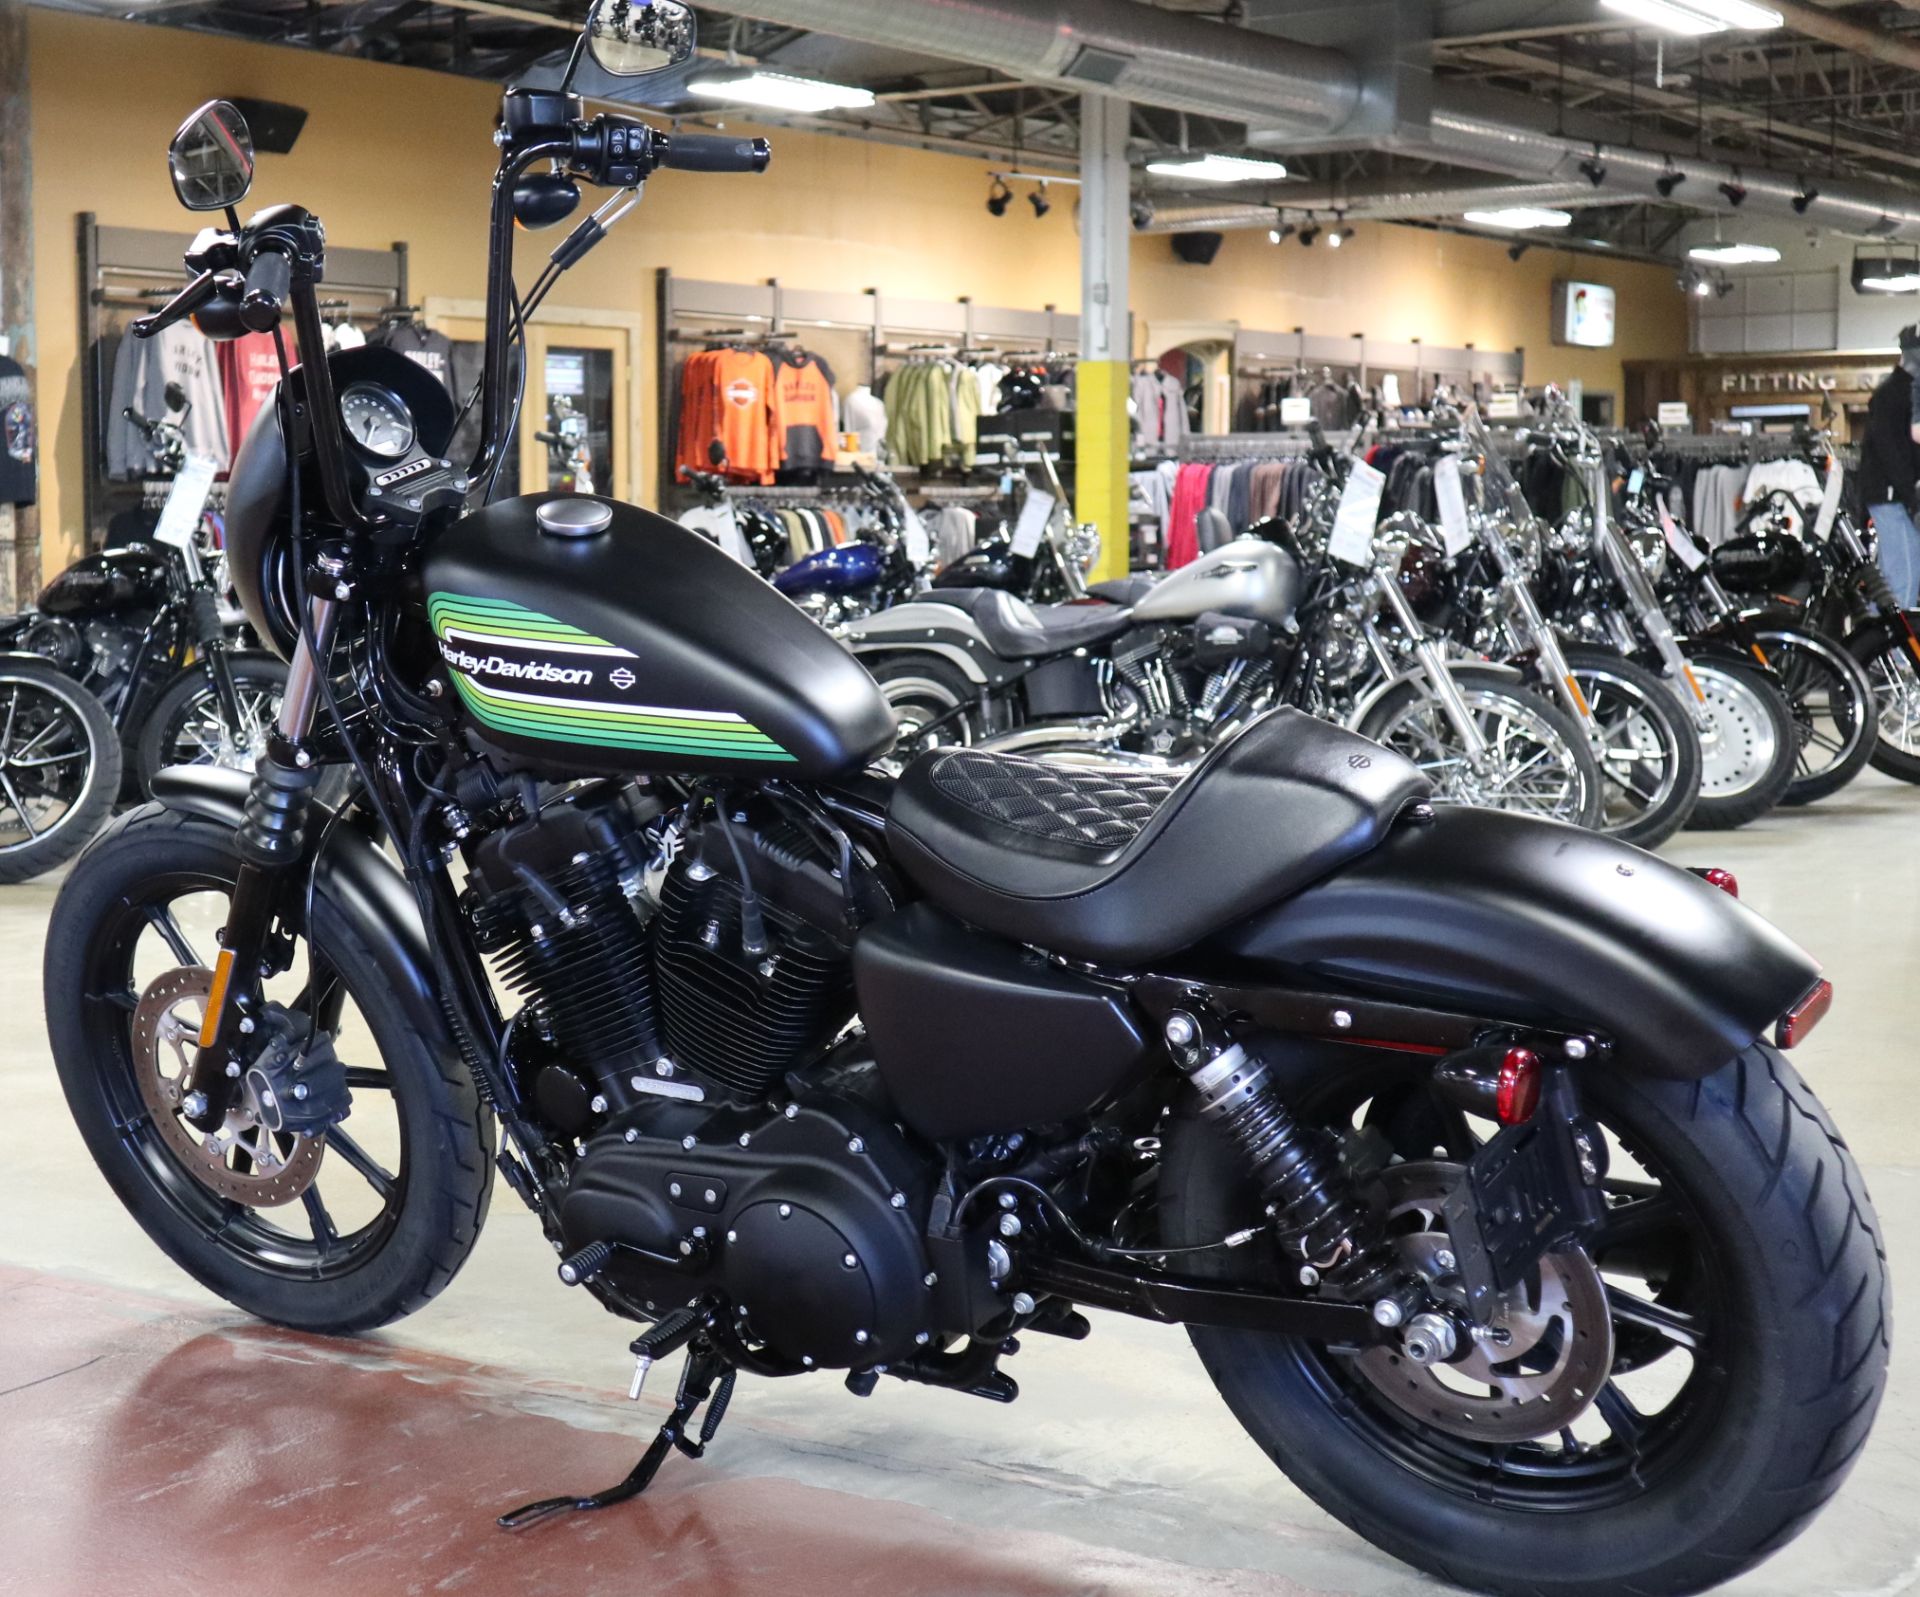 2021 Harley-Davidson Iron 1200™ in New London, Connecticut - Photo 8